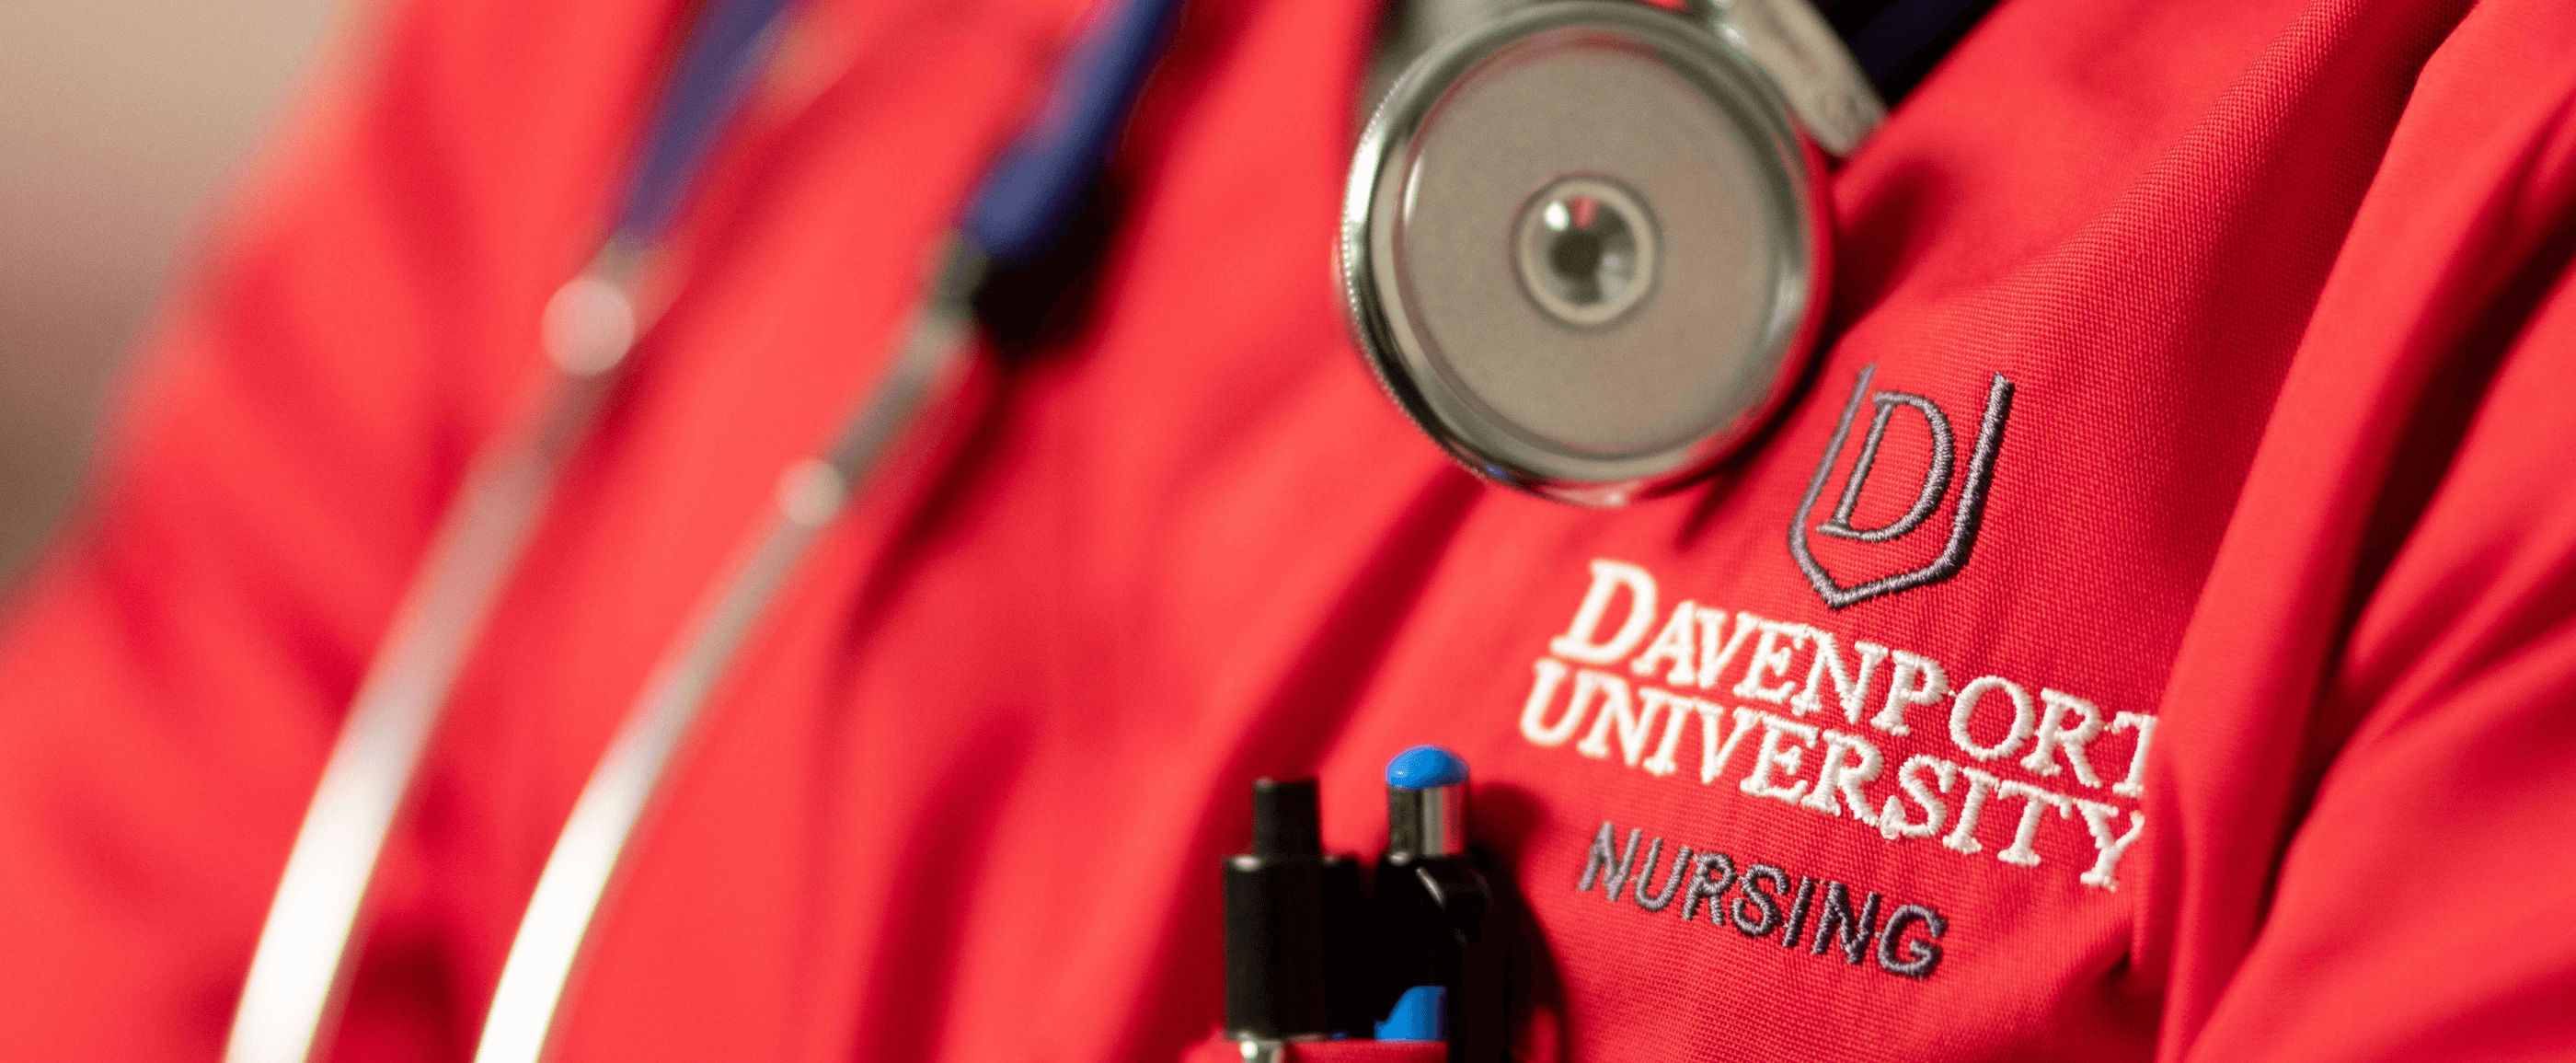 nursing-students-face-pandemic-to-earn-new-skills-davenport-university-banner